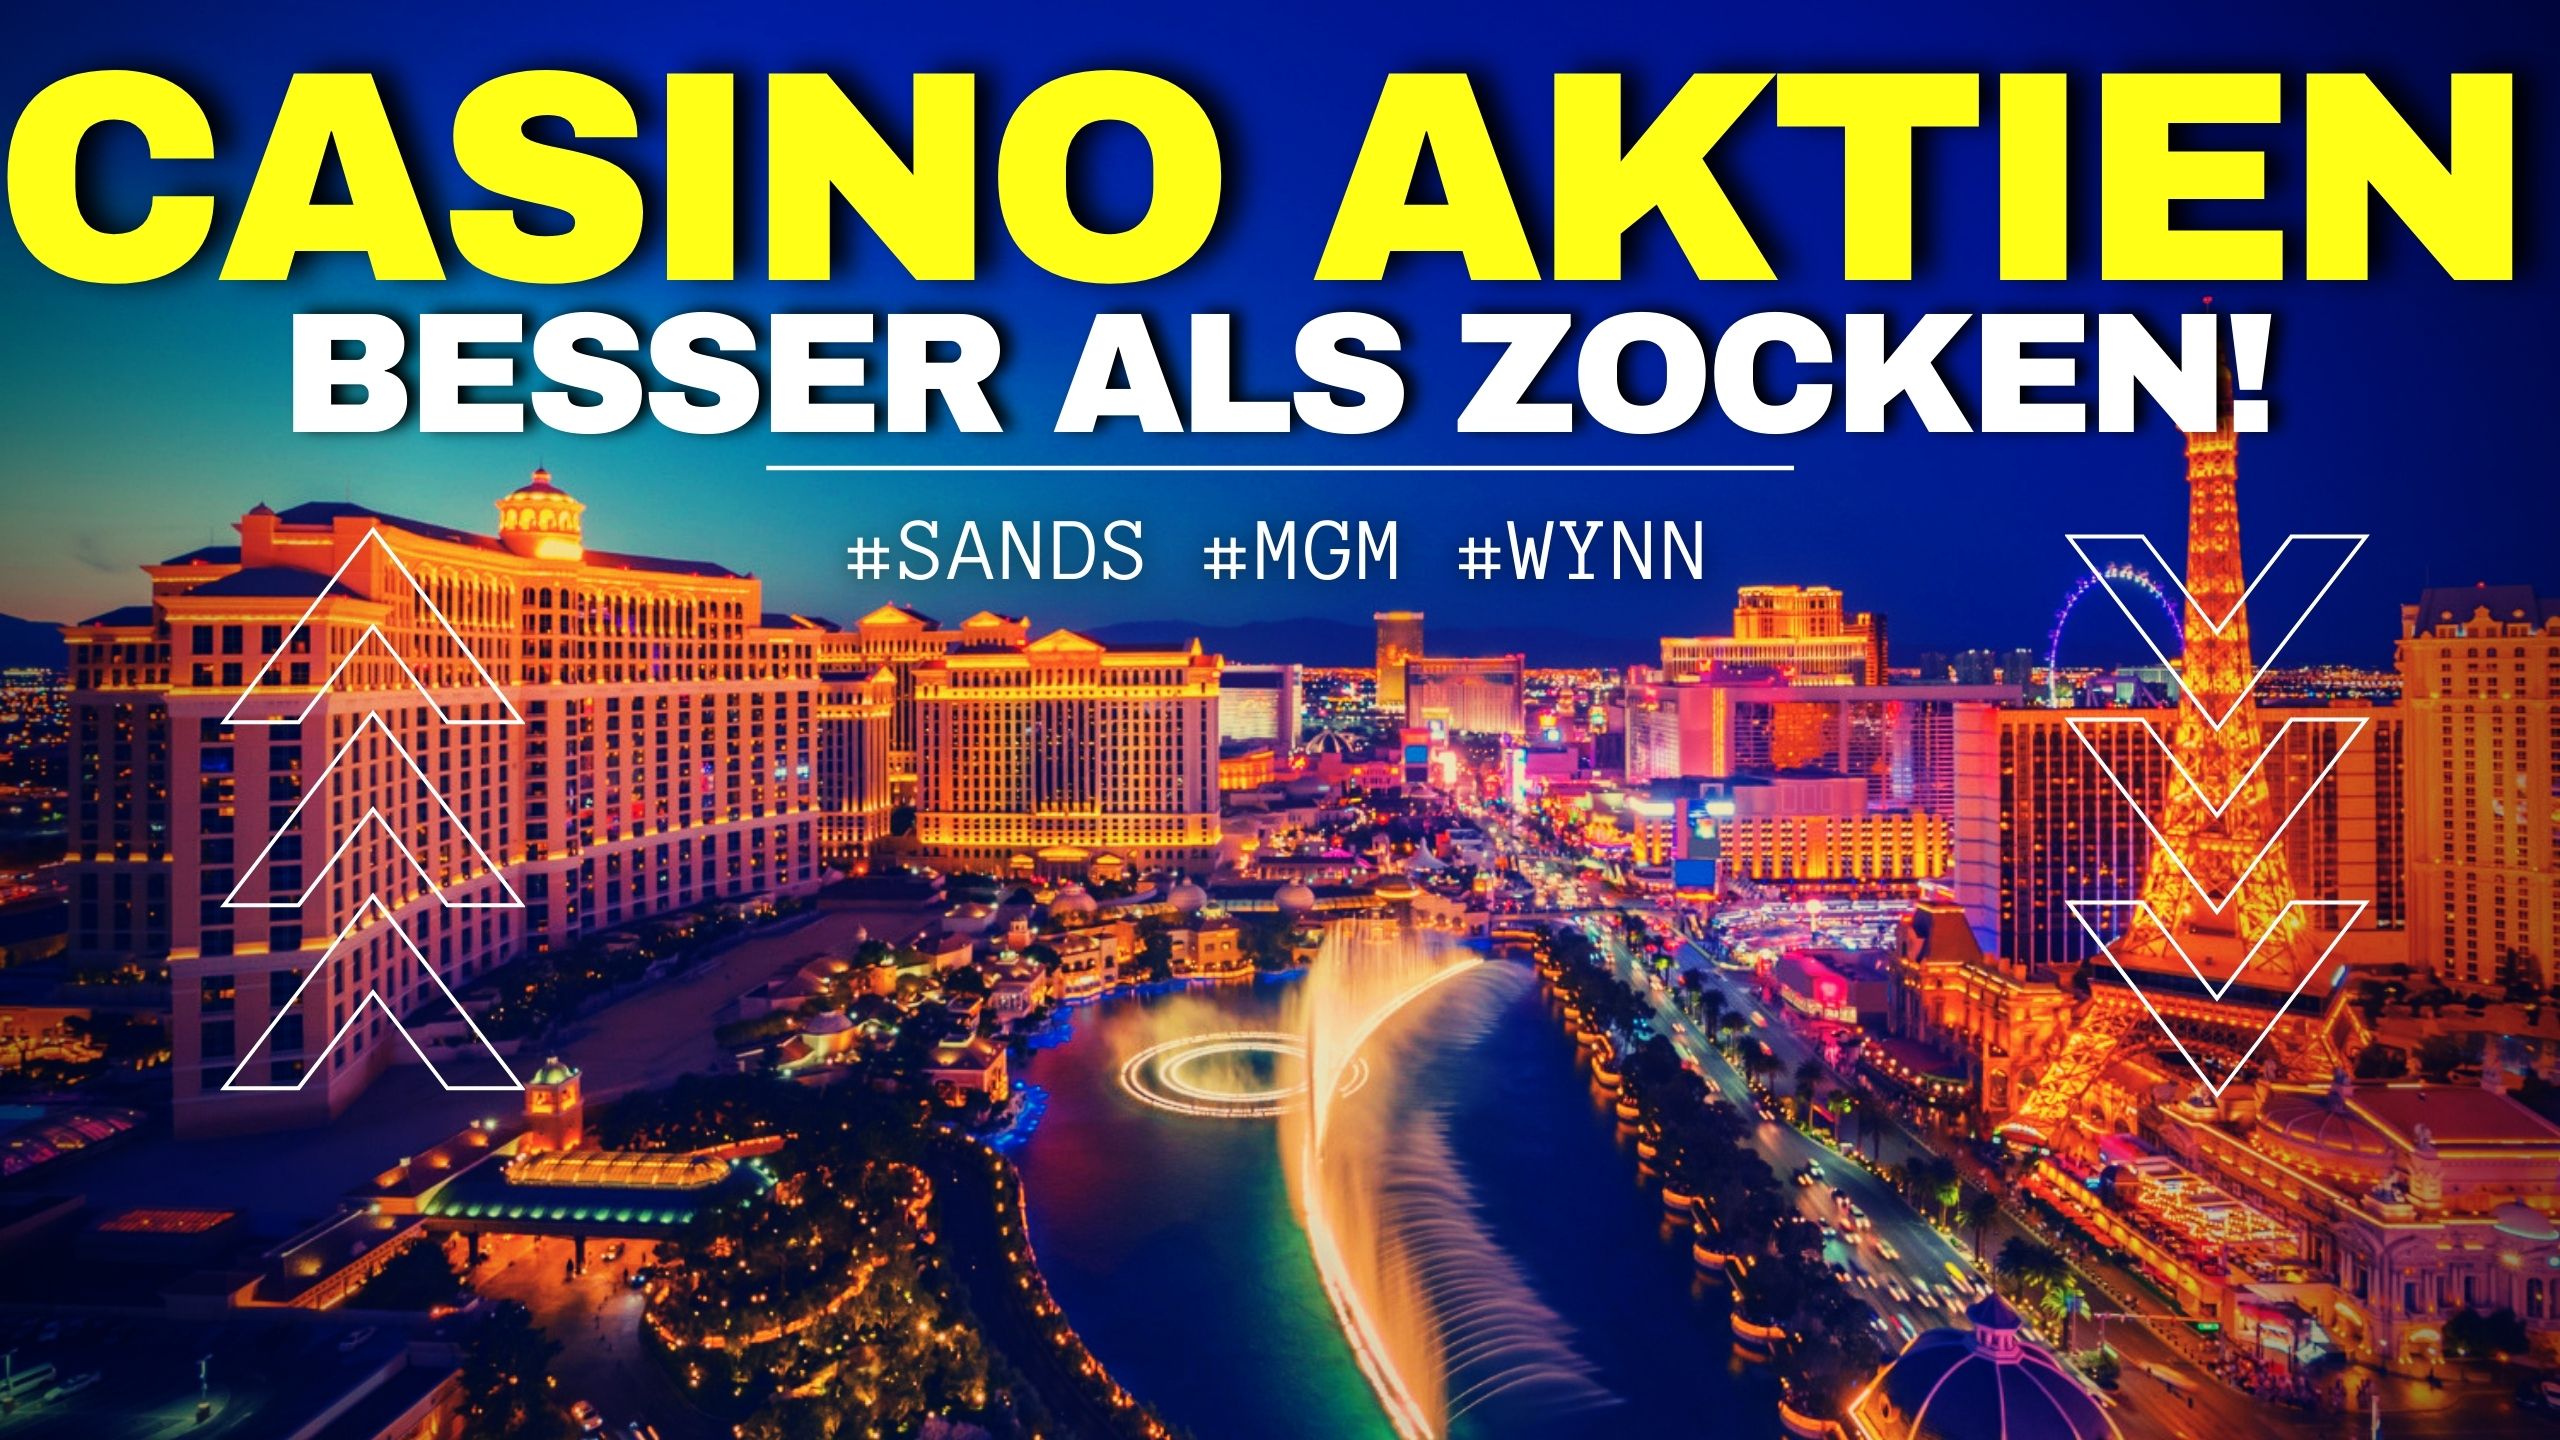 Die besten Casino-Aktien kaufen 2021 - Trendbetter.de